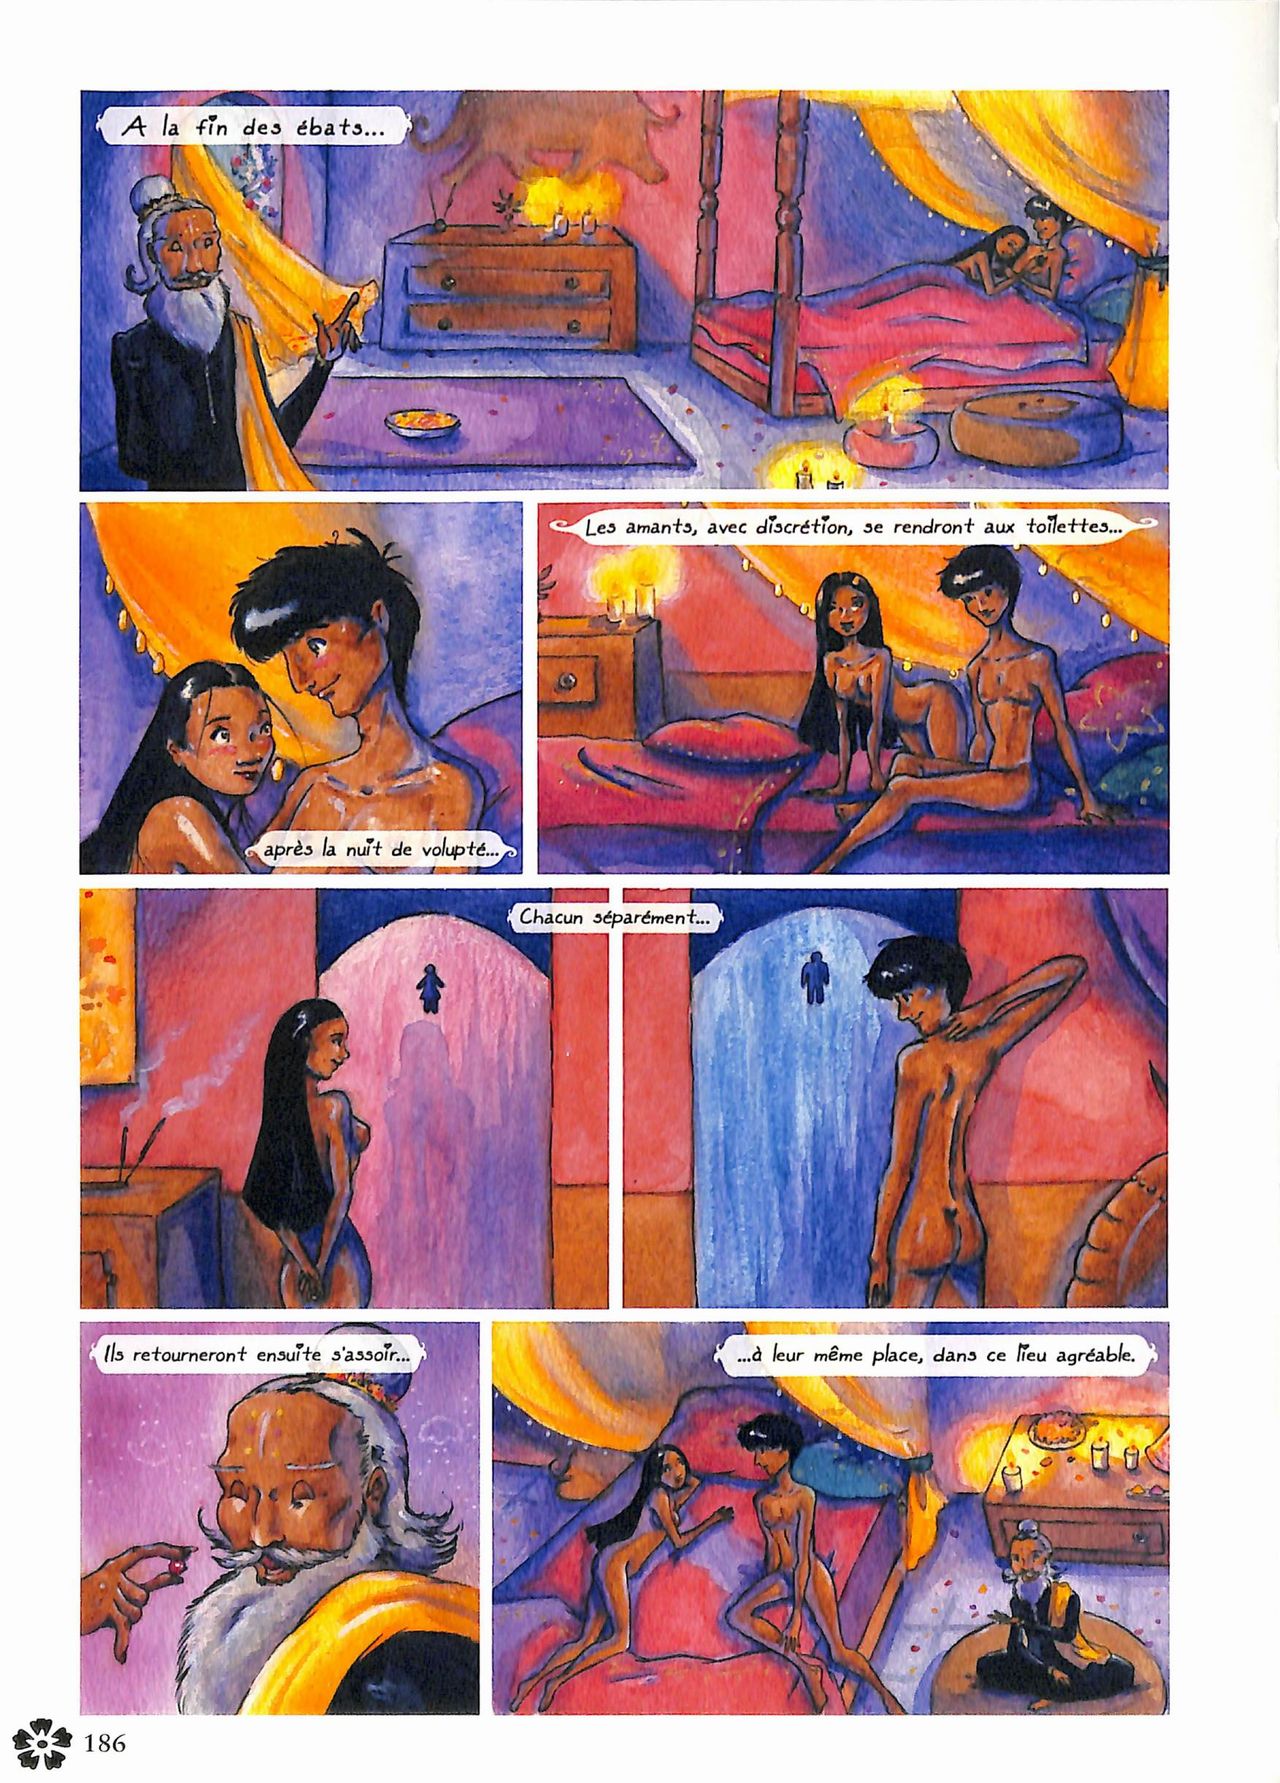 Kama Sutra en bandes dessinées - Kama Sutra with Comics numero d'image 186